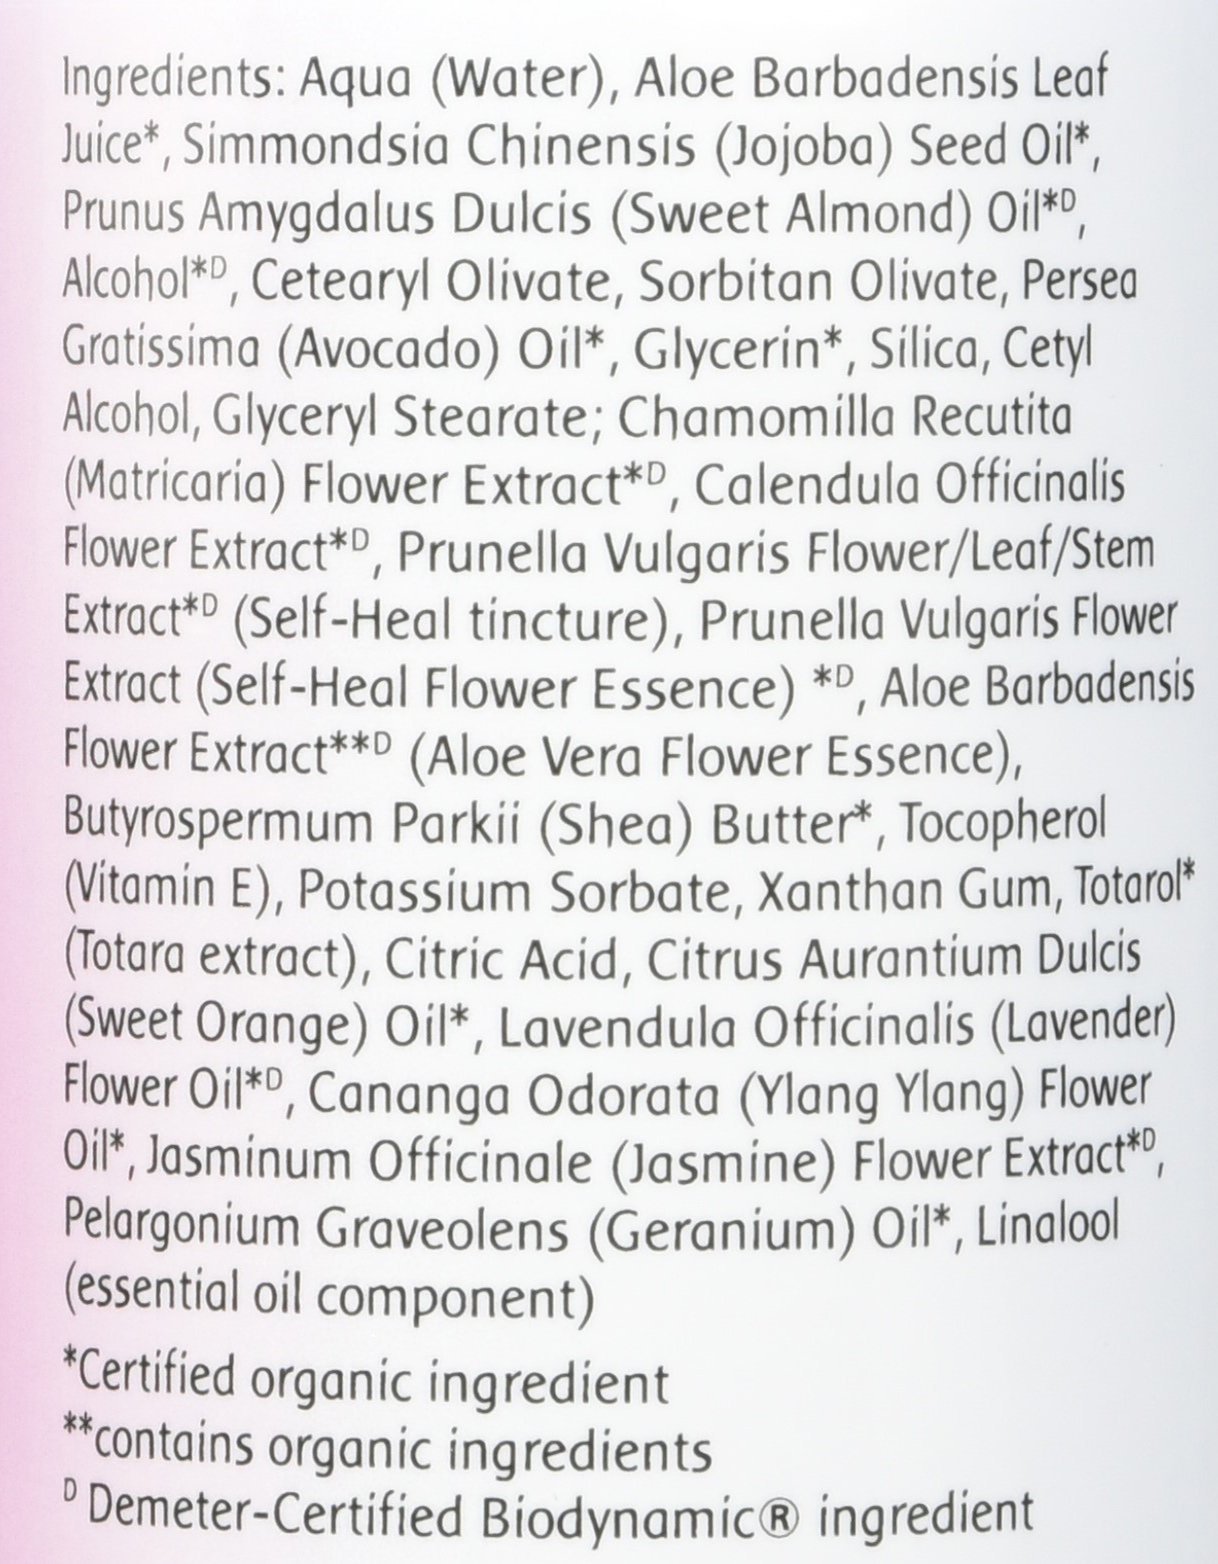 Flower Essence Services Self-Heal Cream Pump Top, 8 Ounce